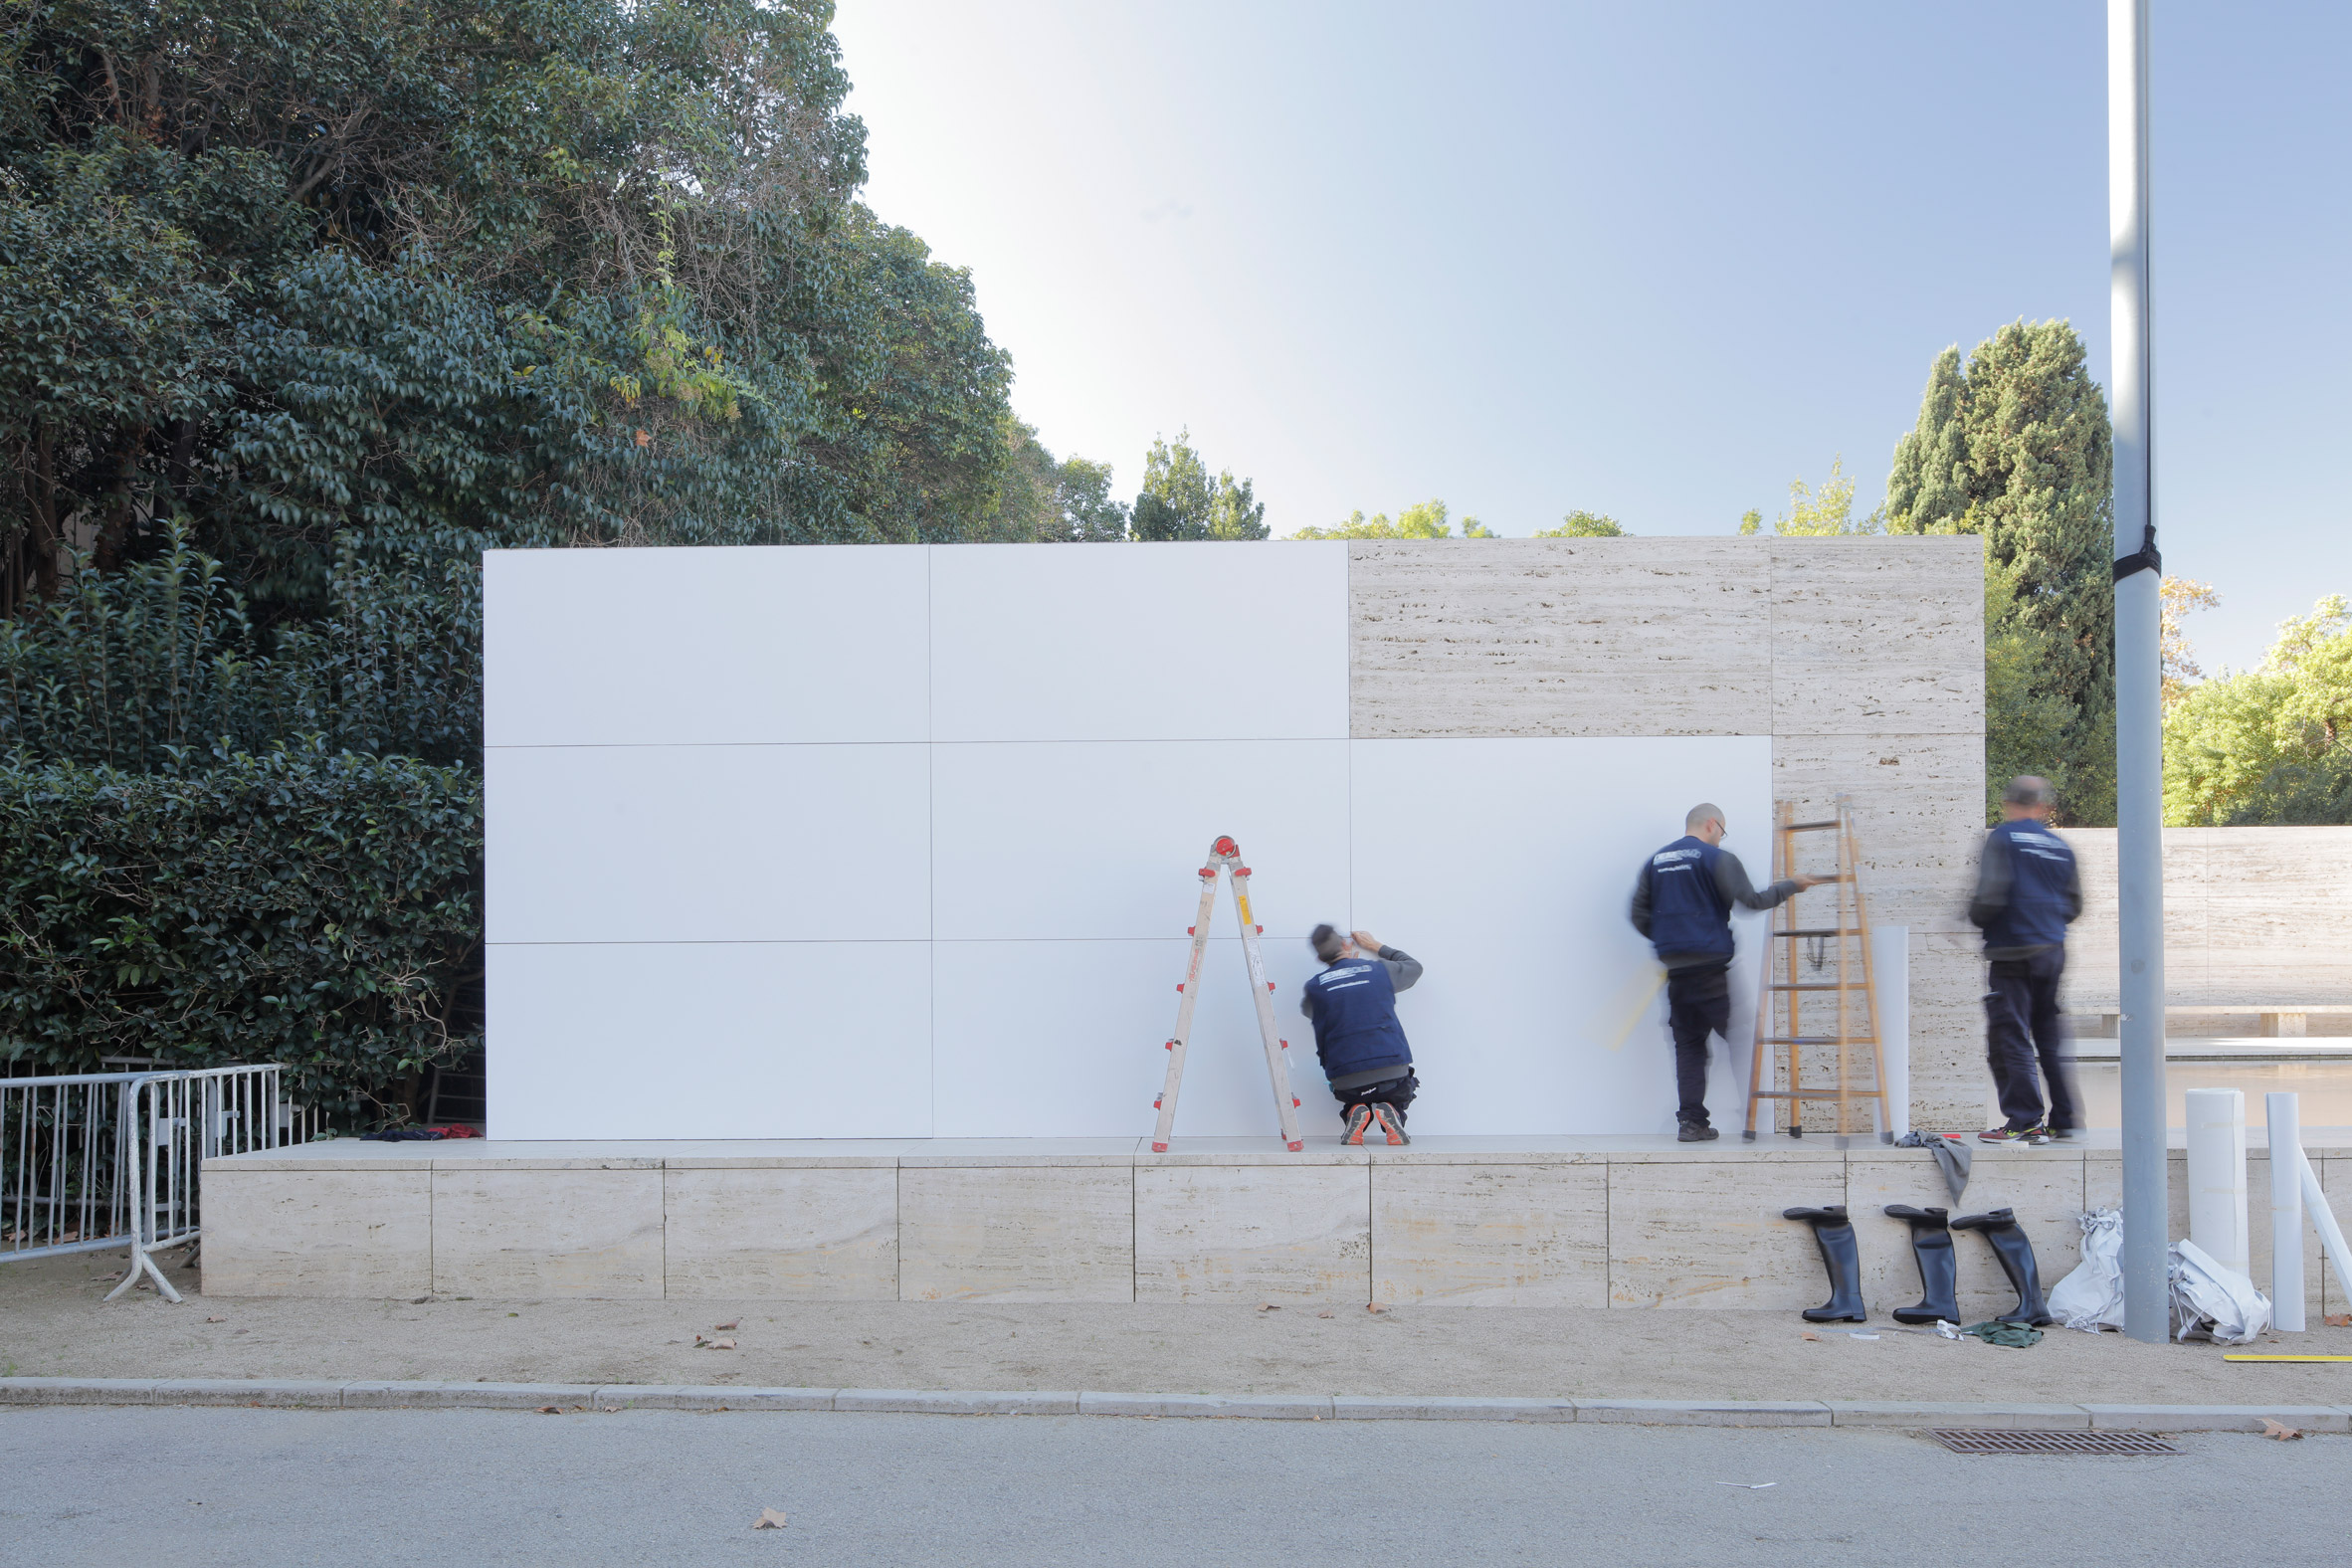 Mies van der Rohe's Barcelona Pavilion loses its marble walls-15